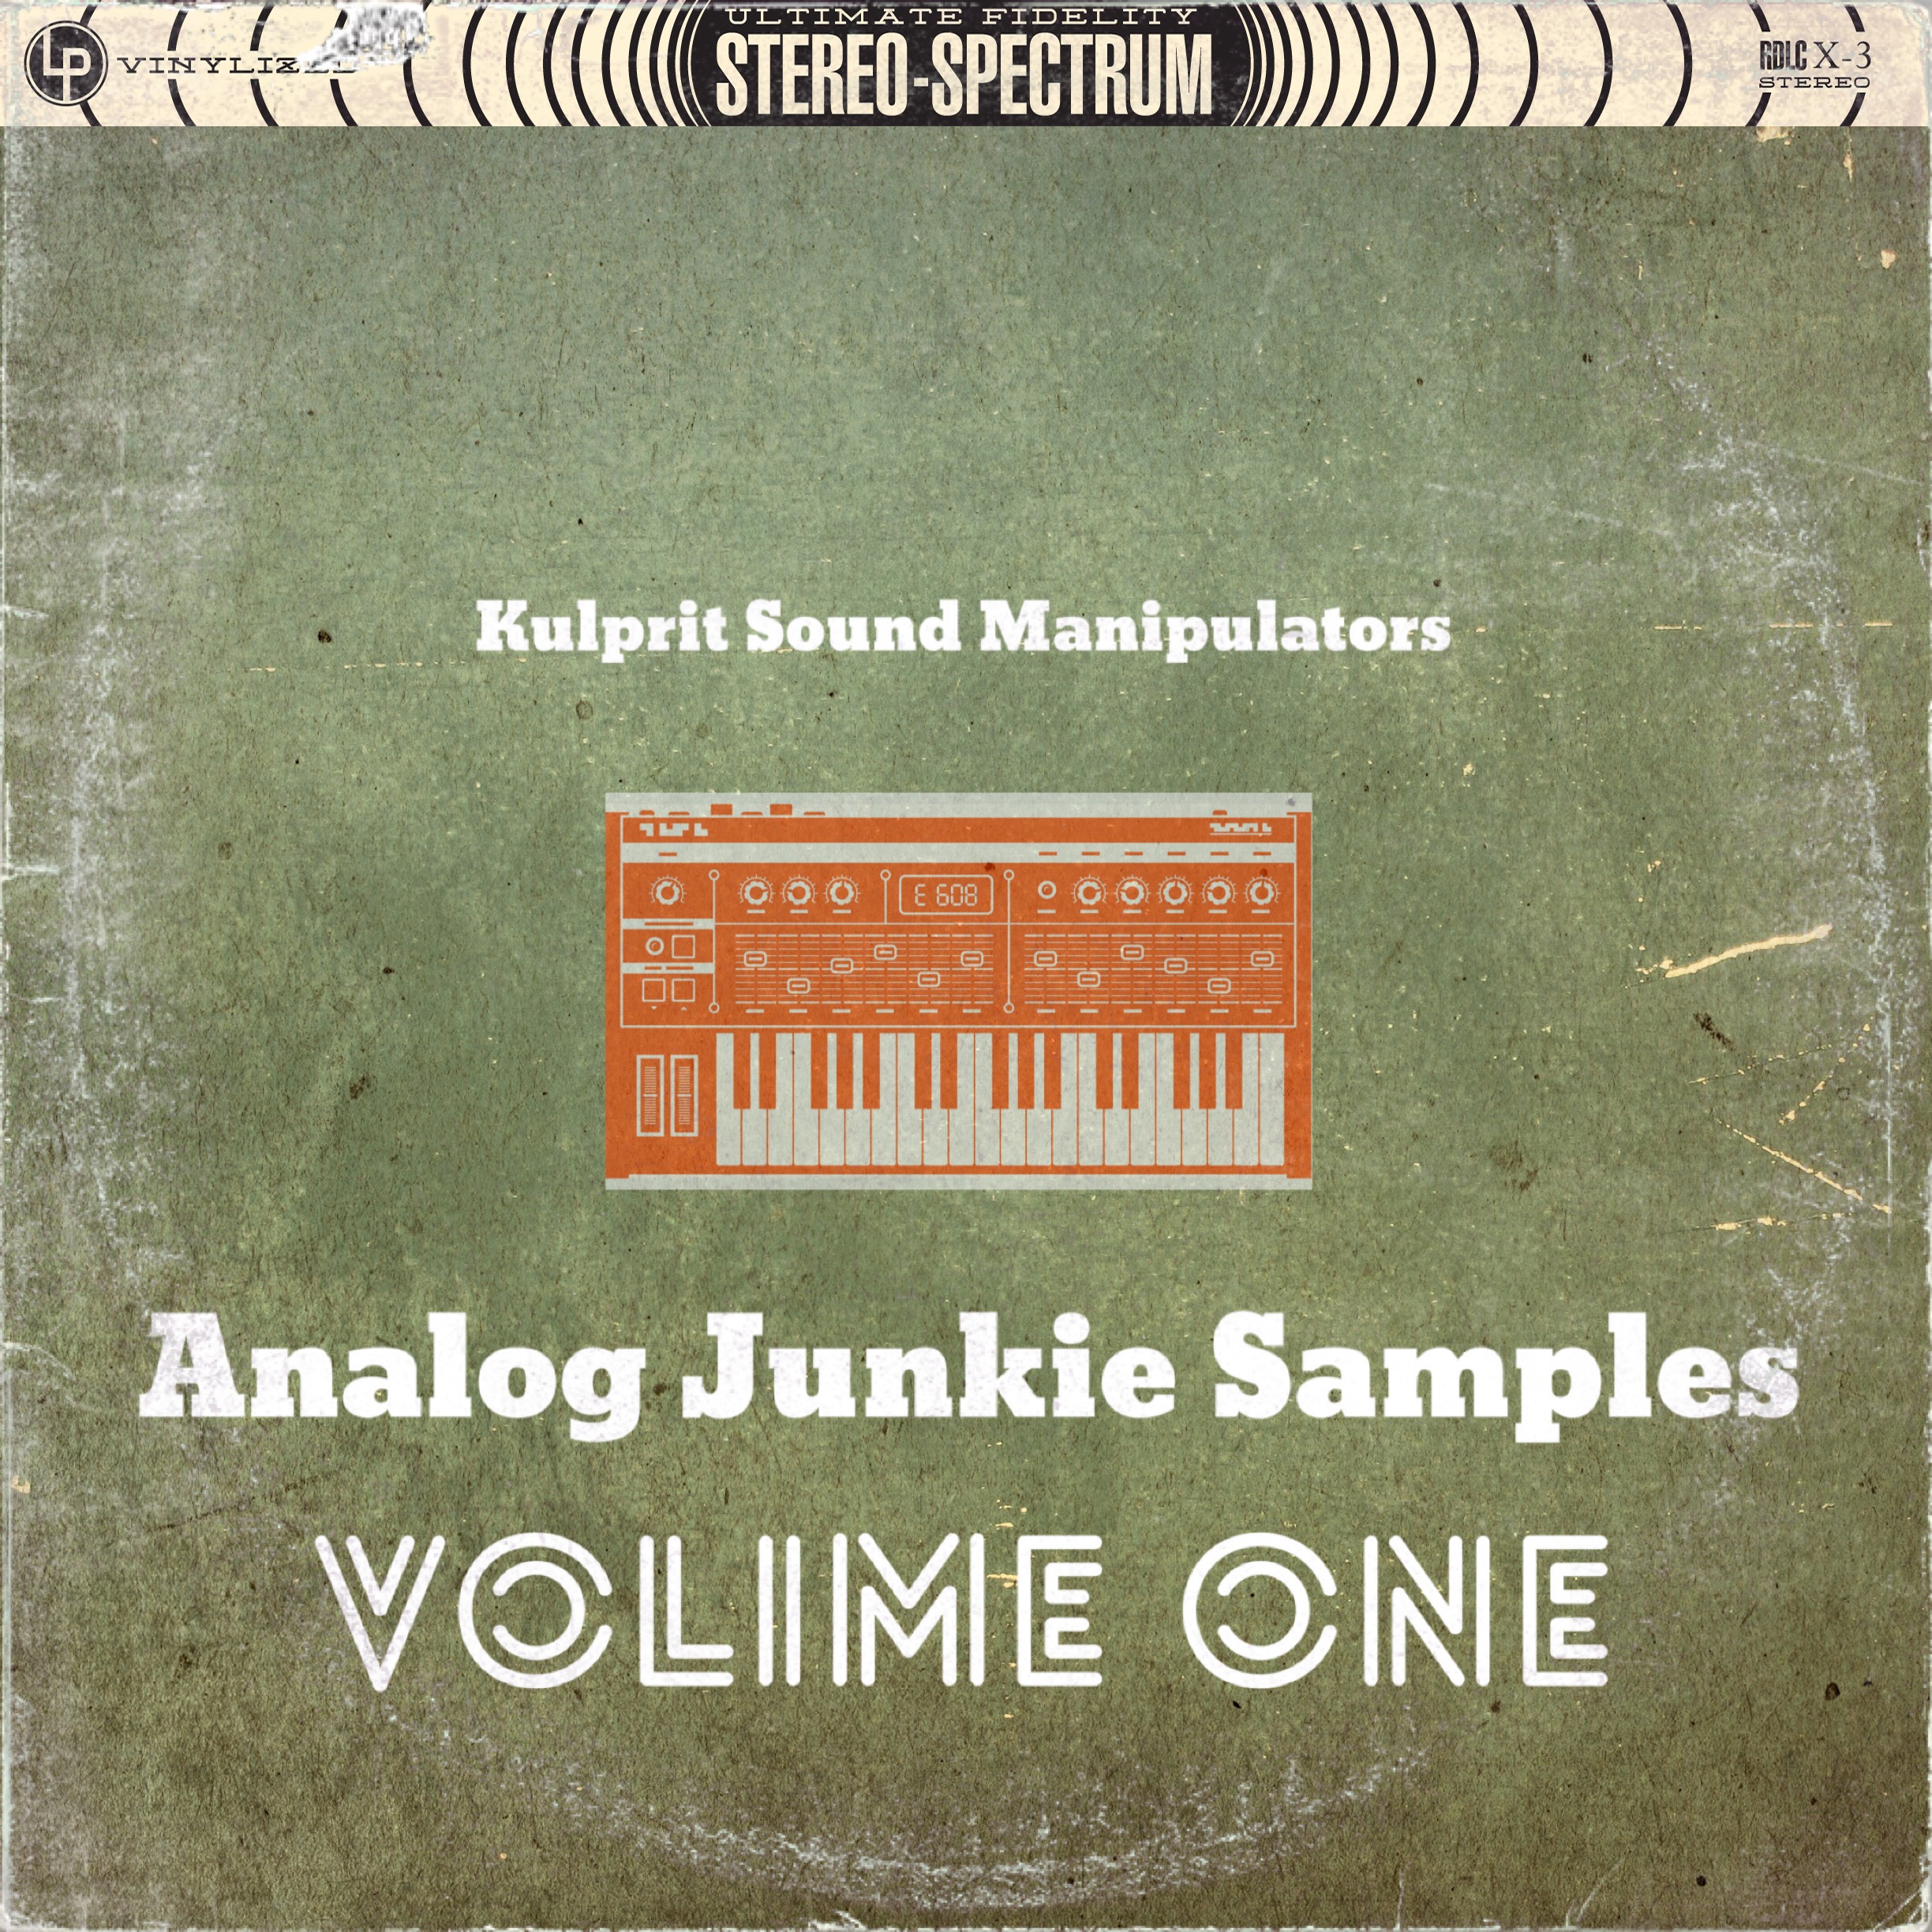 Analog Junkie Samples Volume 1 Artwork